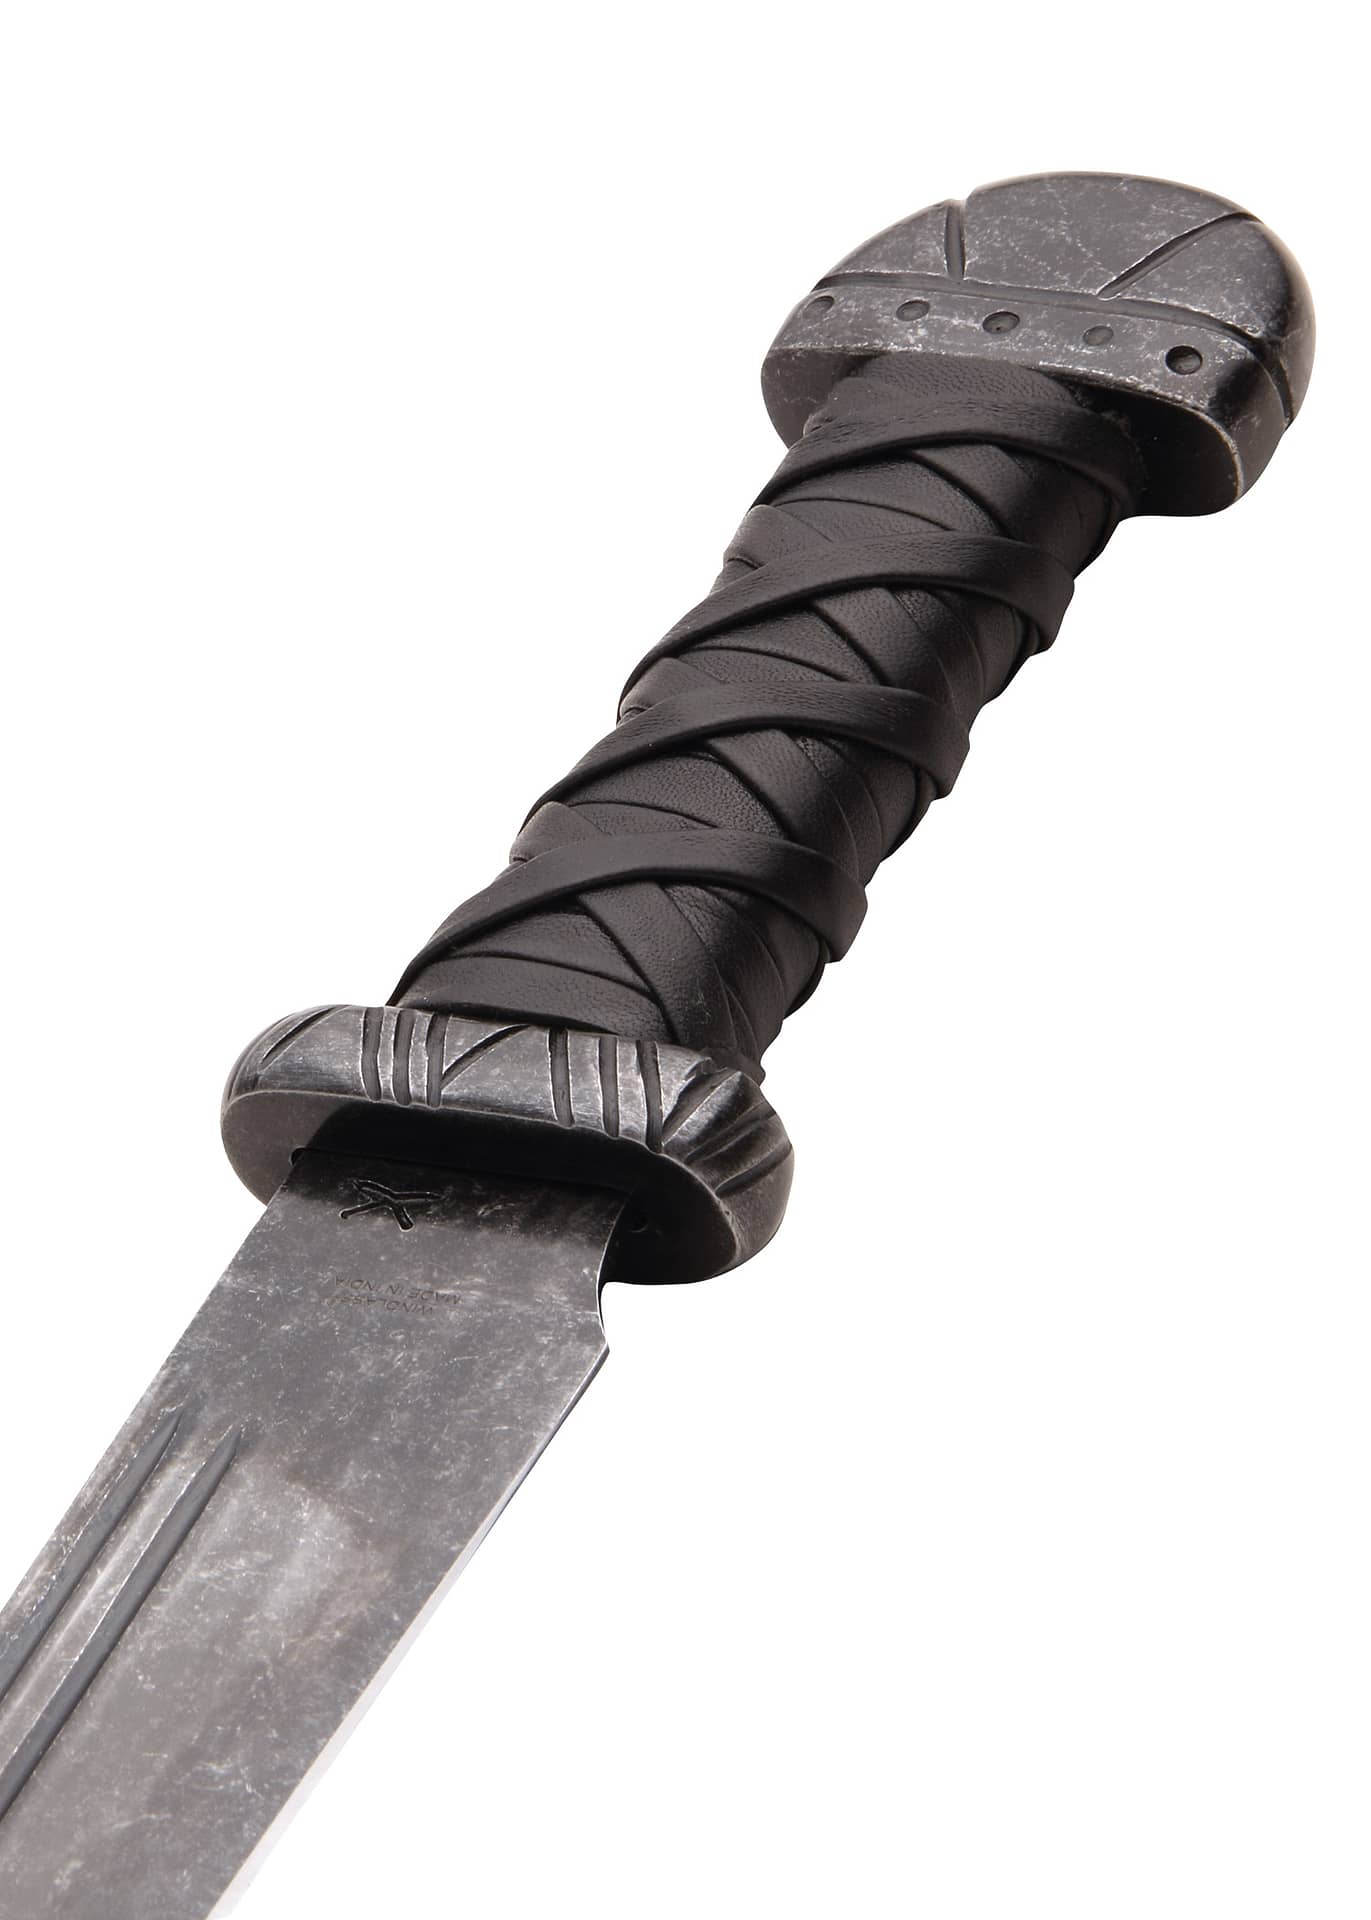 Cuchillo vikingo Grito de batalla Maldon Seax 0210404119 - Espadas y Más